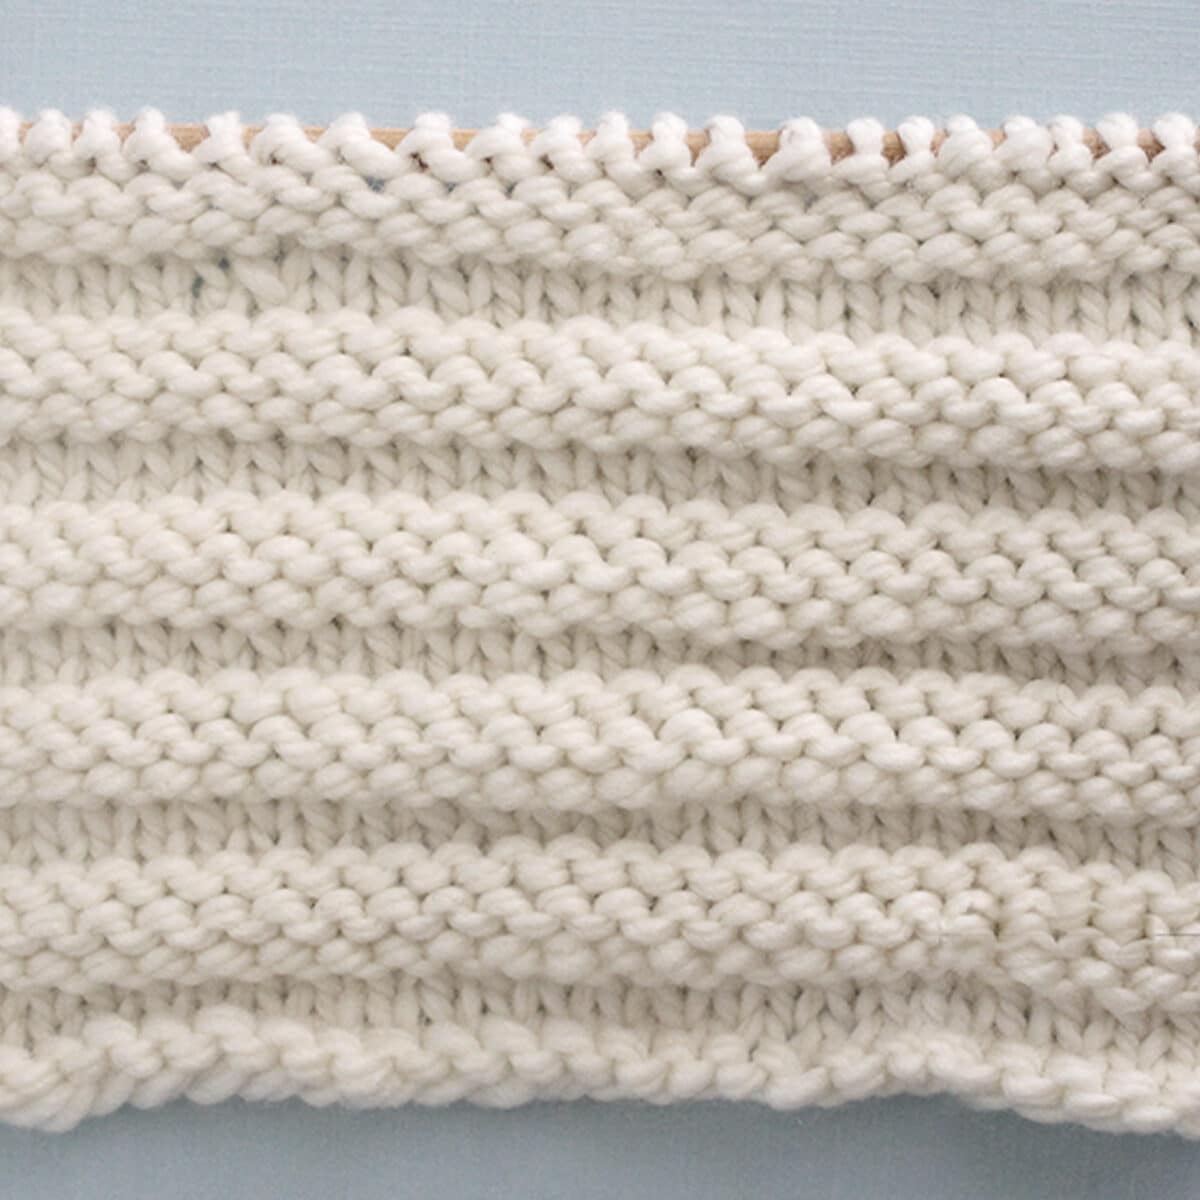 Knitted Reverse Ridge Stitch Pattern in white yarn on knitting needle.